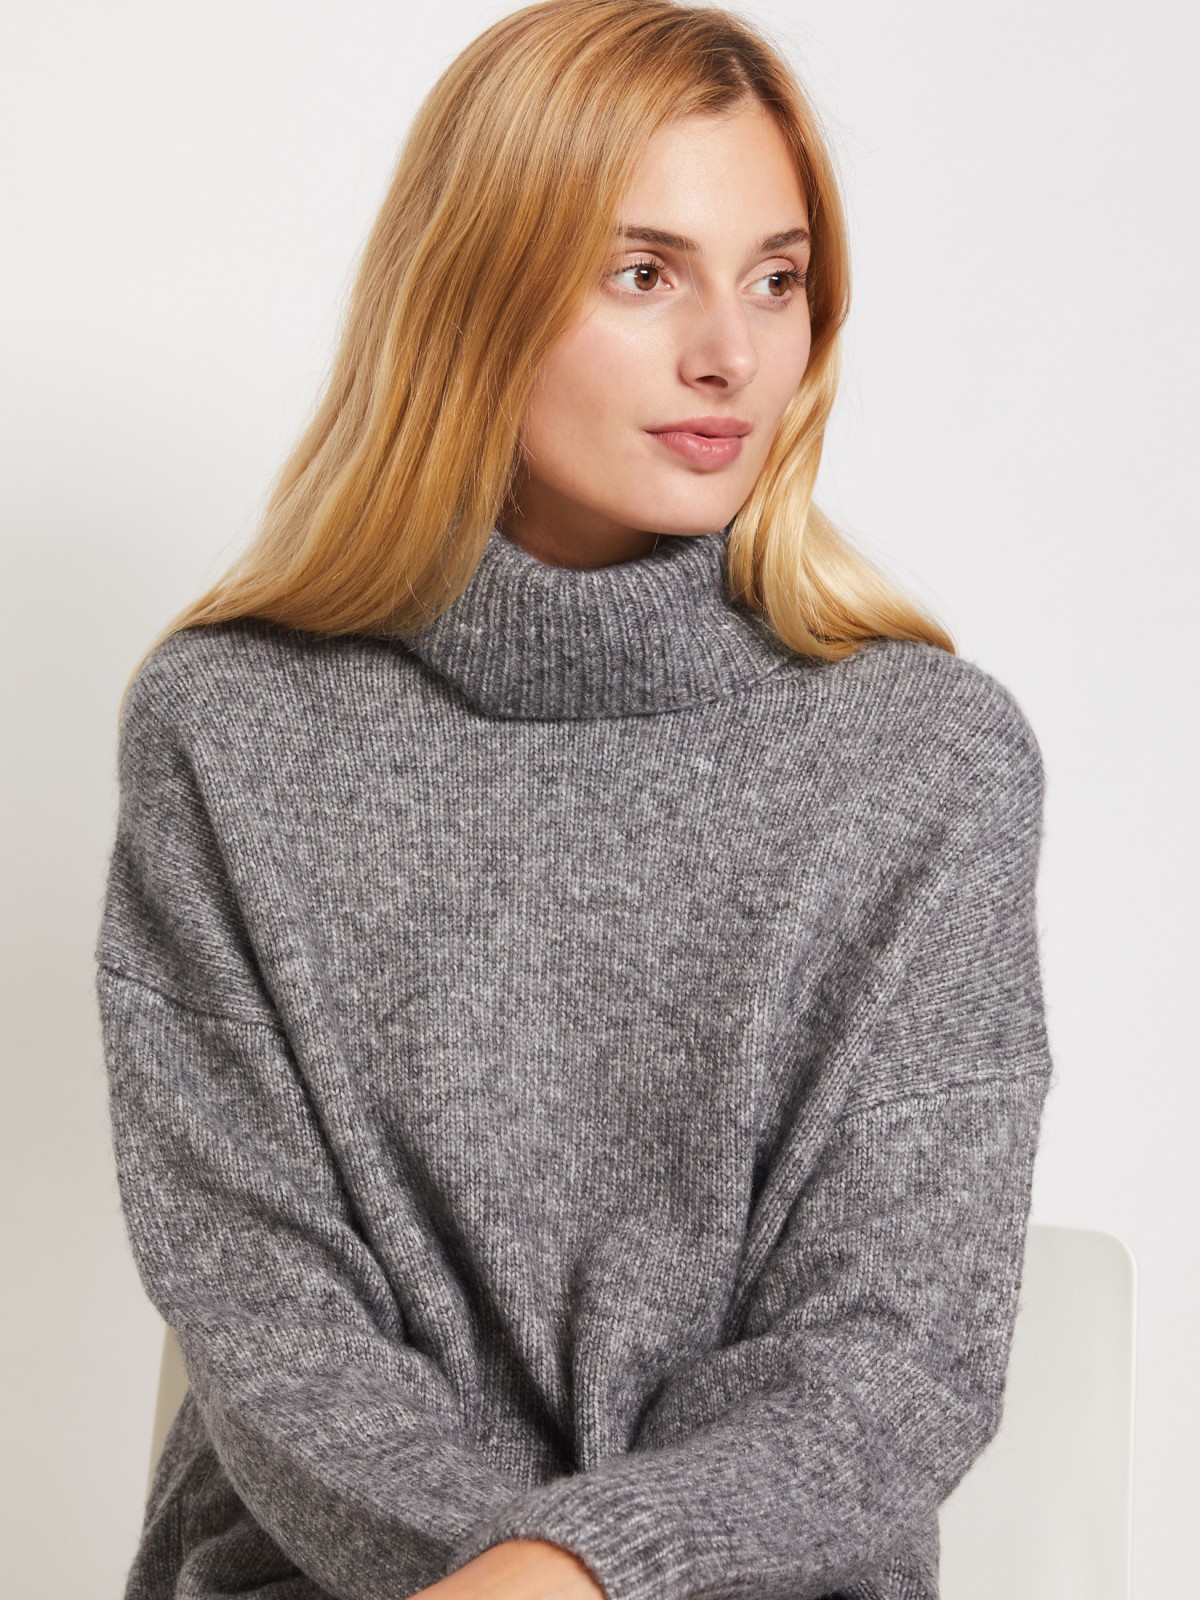 Вязаный свитер оверсайз zolla 221346193063, цвет серый, размер XS - фото 6